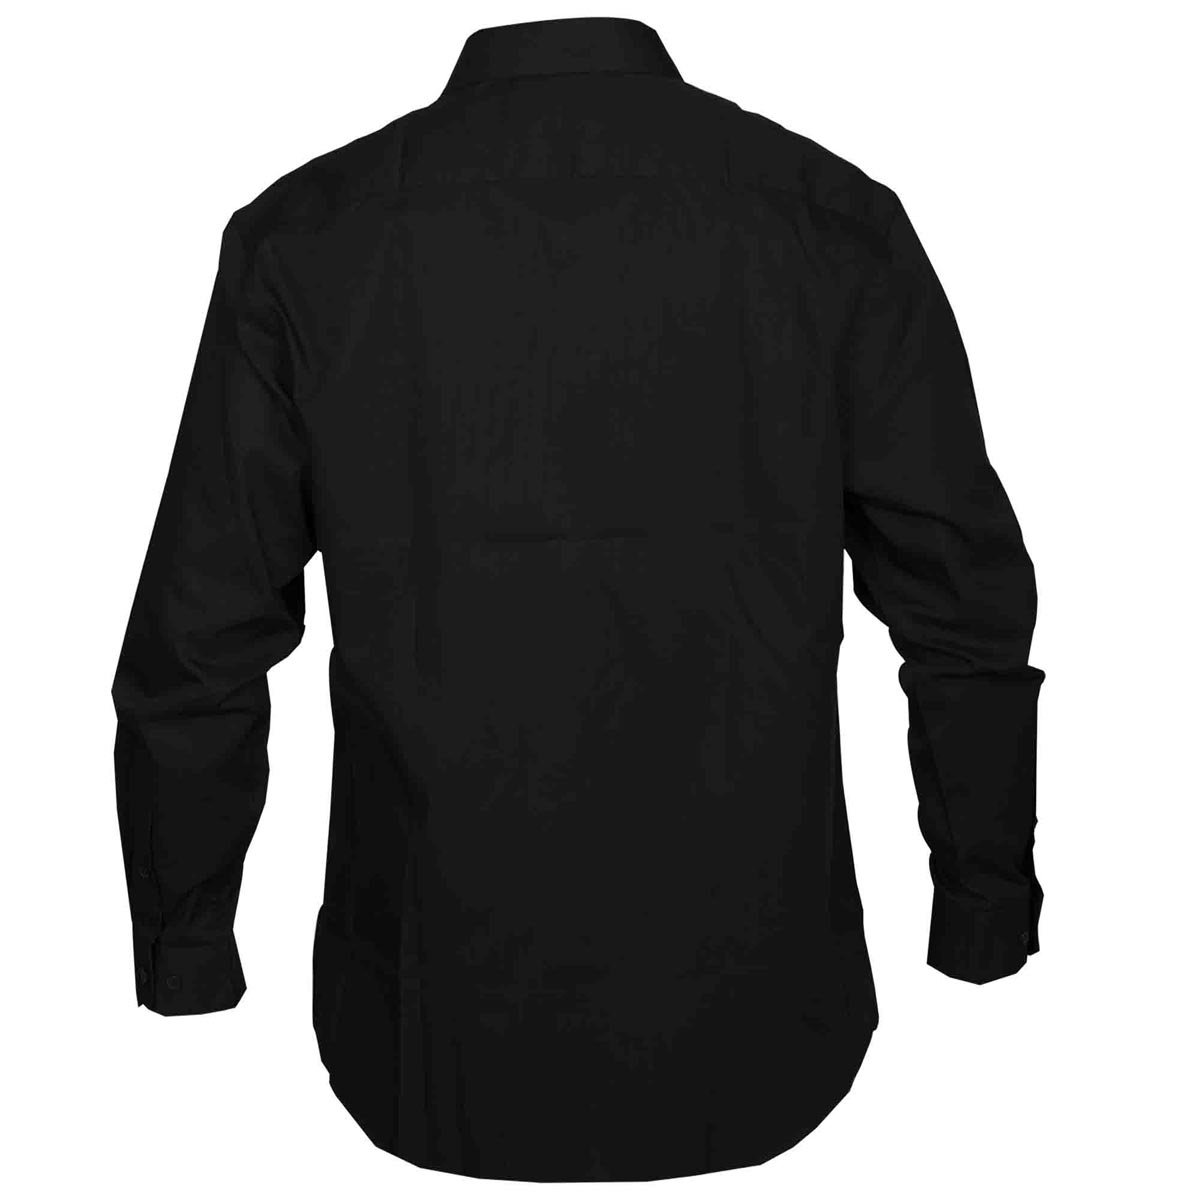 Camisa de Vestir Kenneth Cole Color Negro